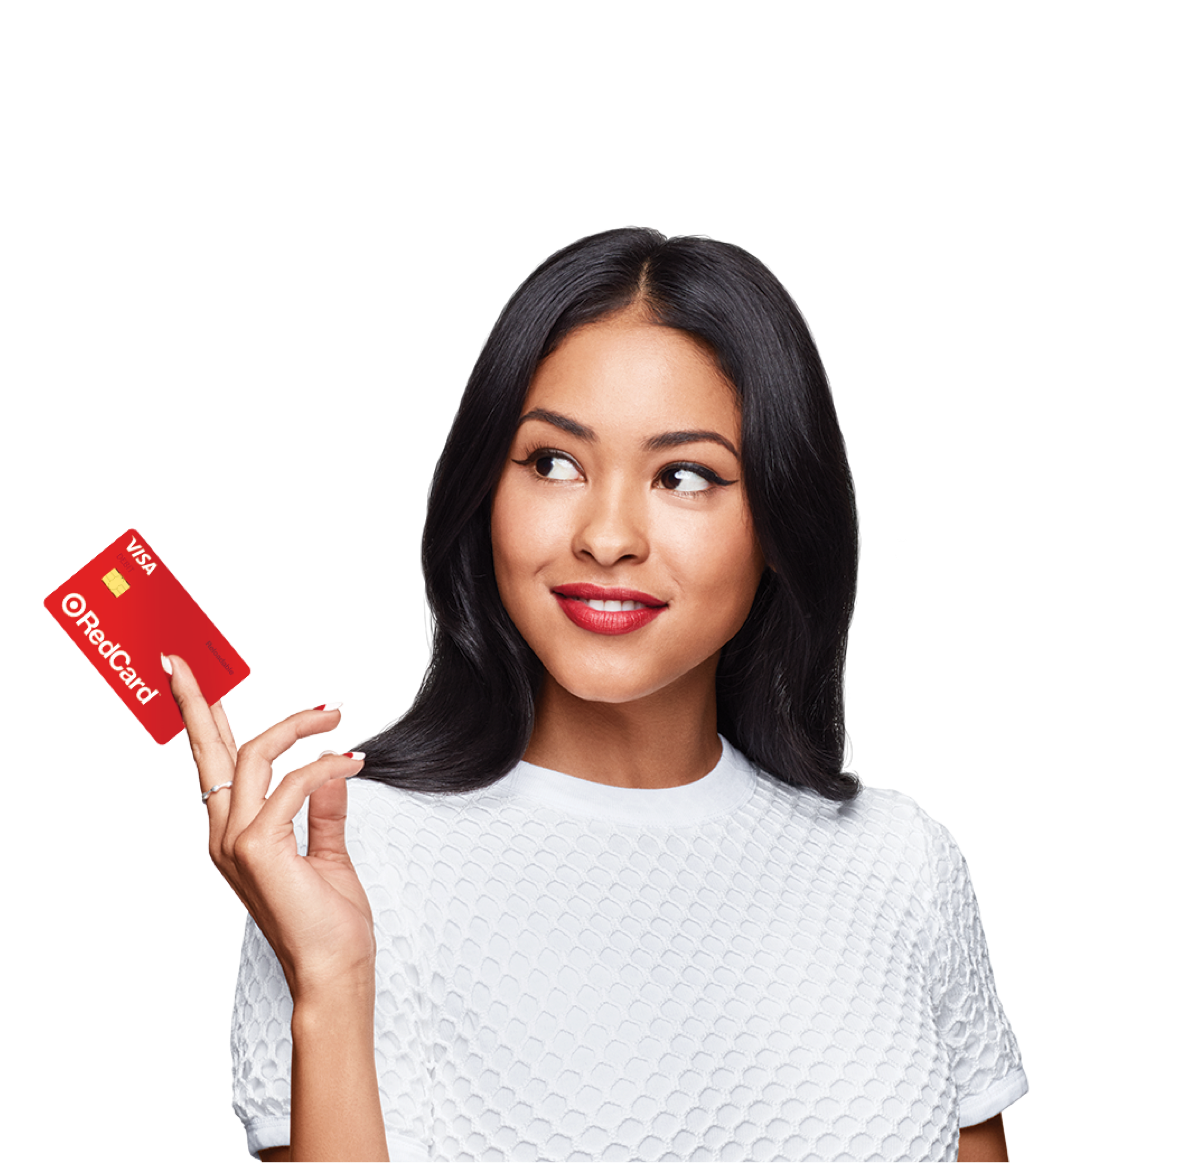 Reloadable Visa Debit Card, Save 5% at Target, No Monthly Fee